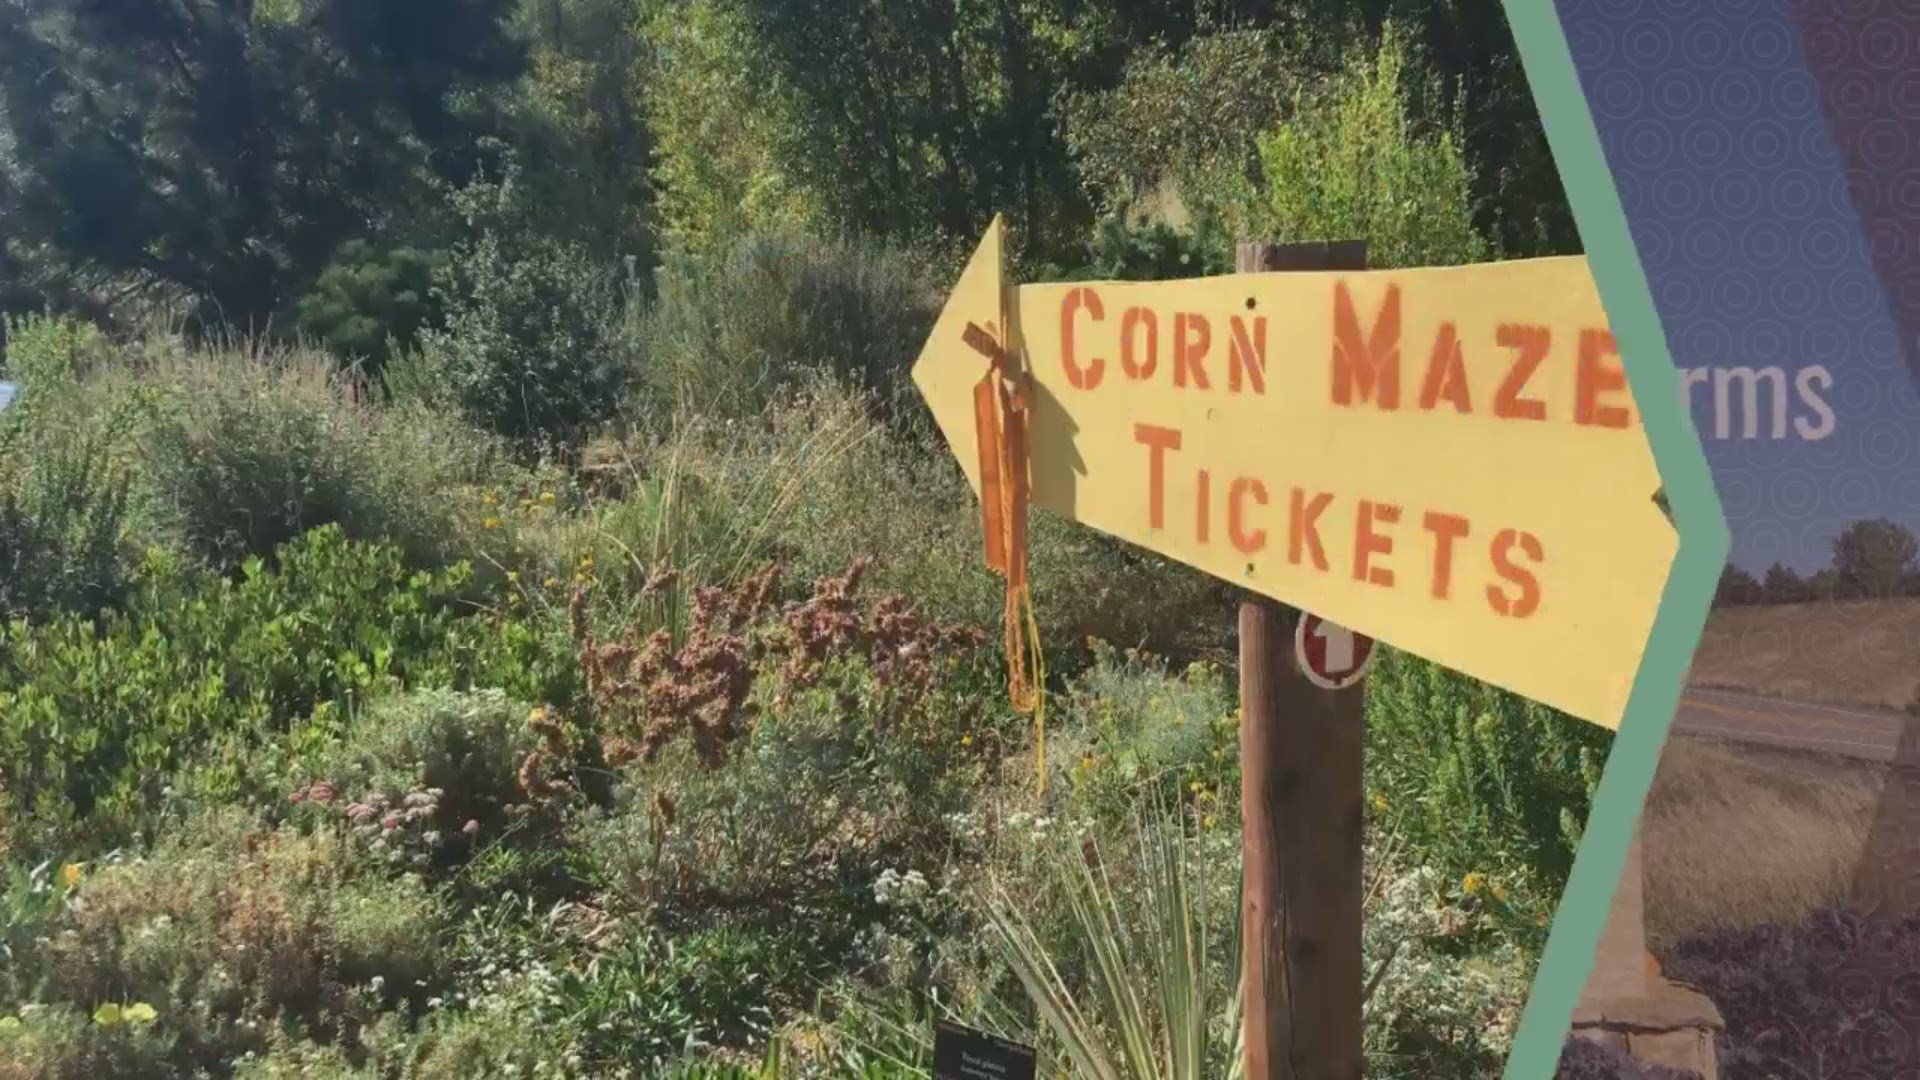 A look at the Denver Botanic Gardens Chatfield Farms' annual corn maze in Littleton, Colorado.